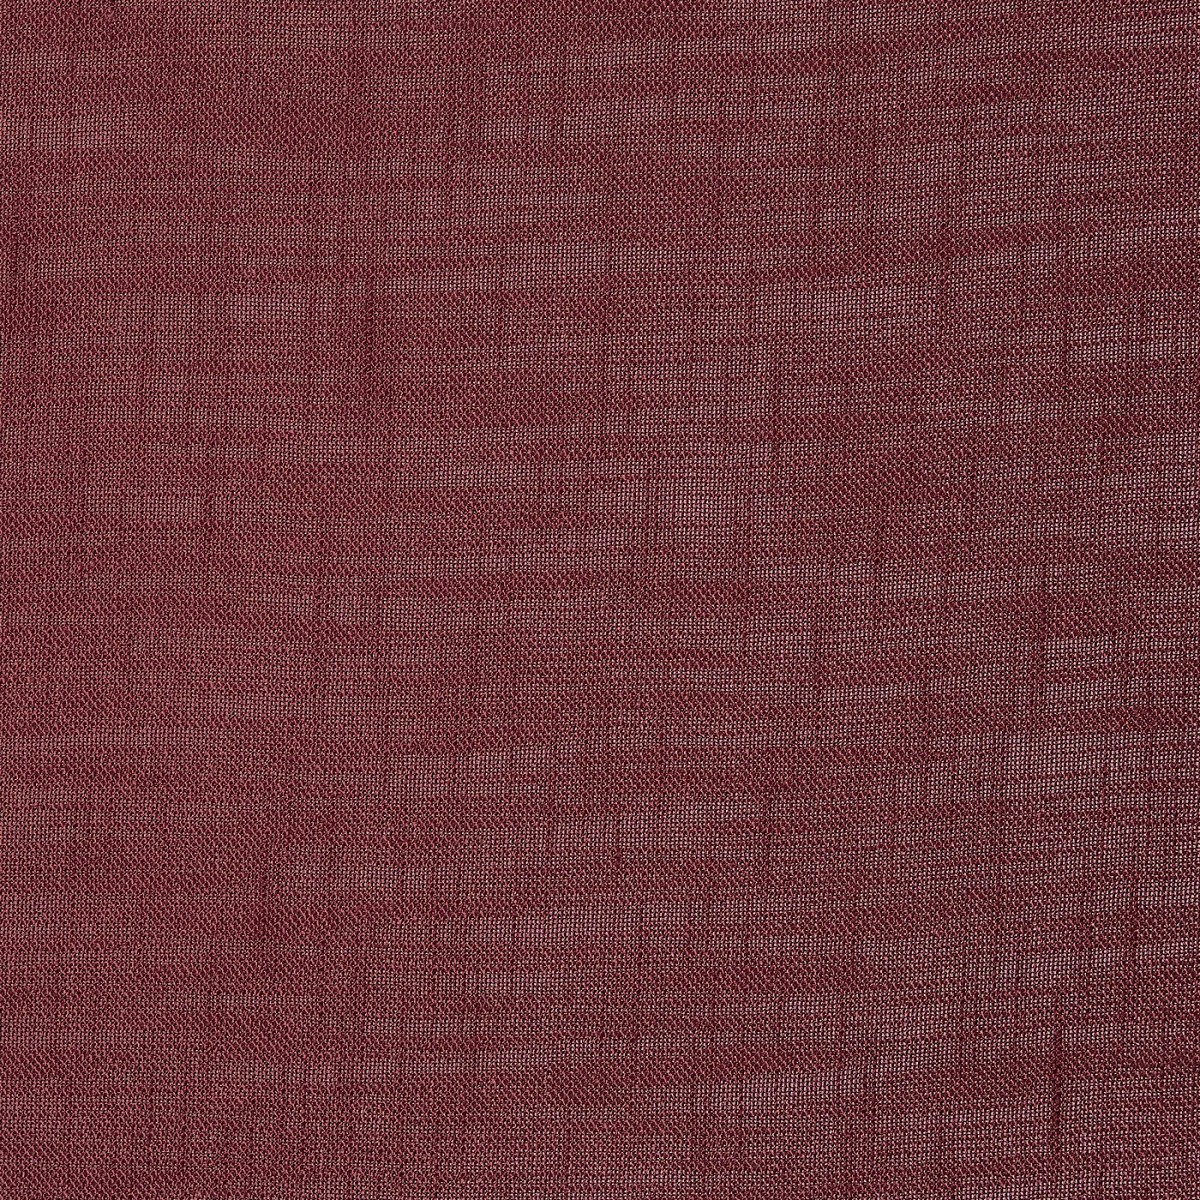 Harmony Berry Fabric by Prestigious Textiles